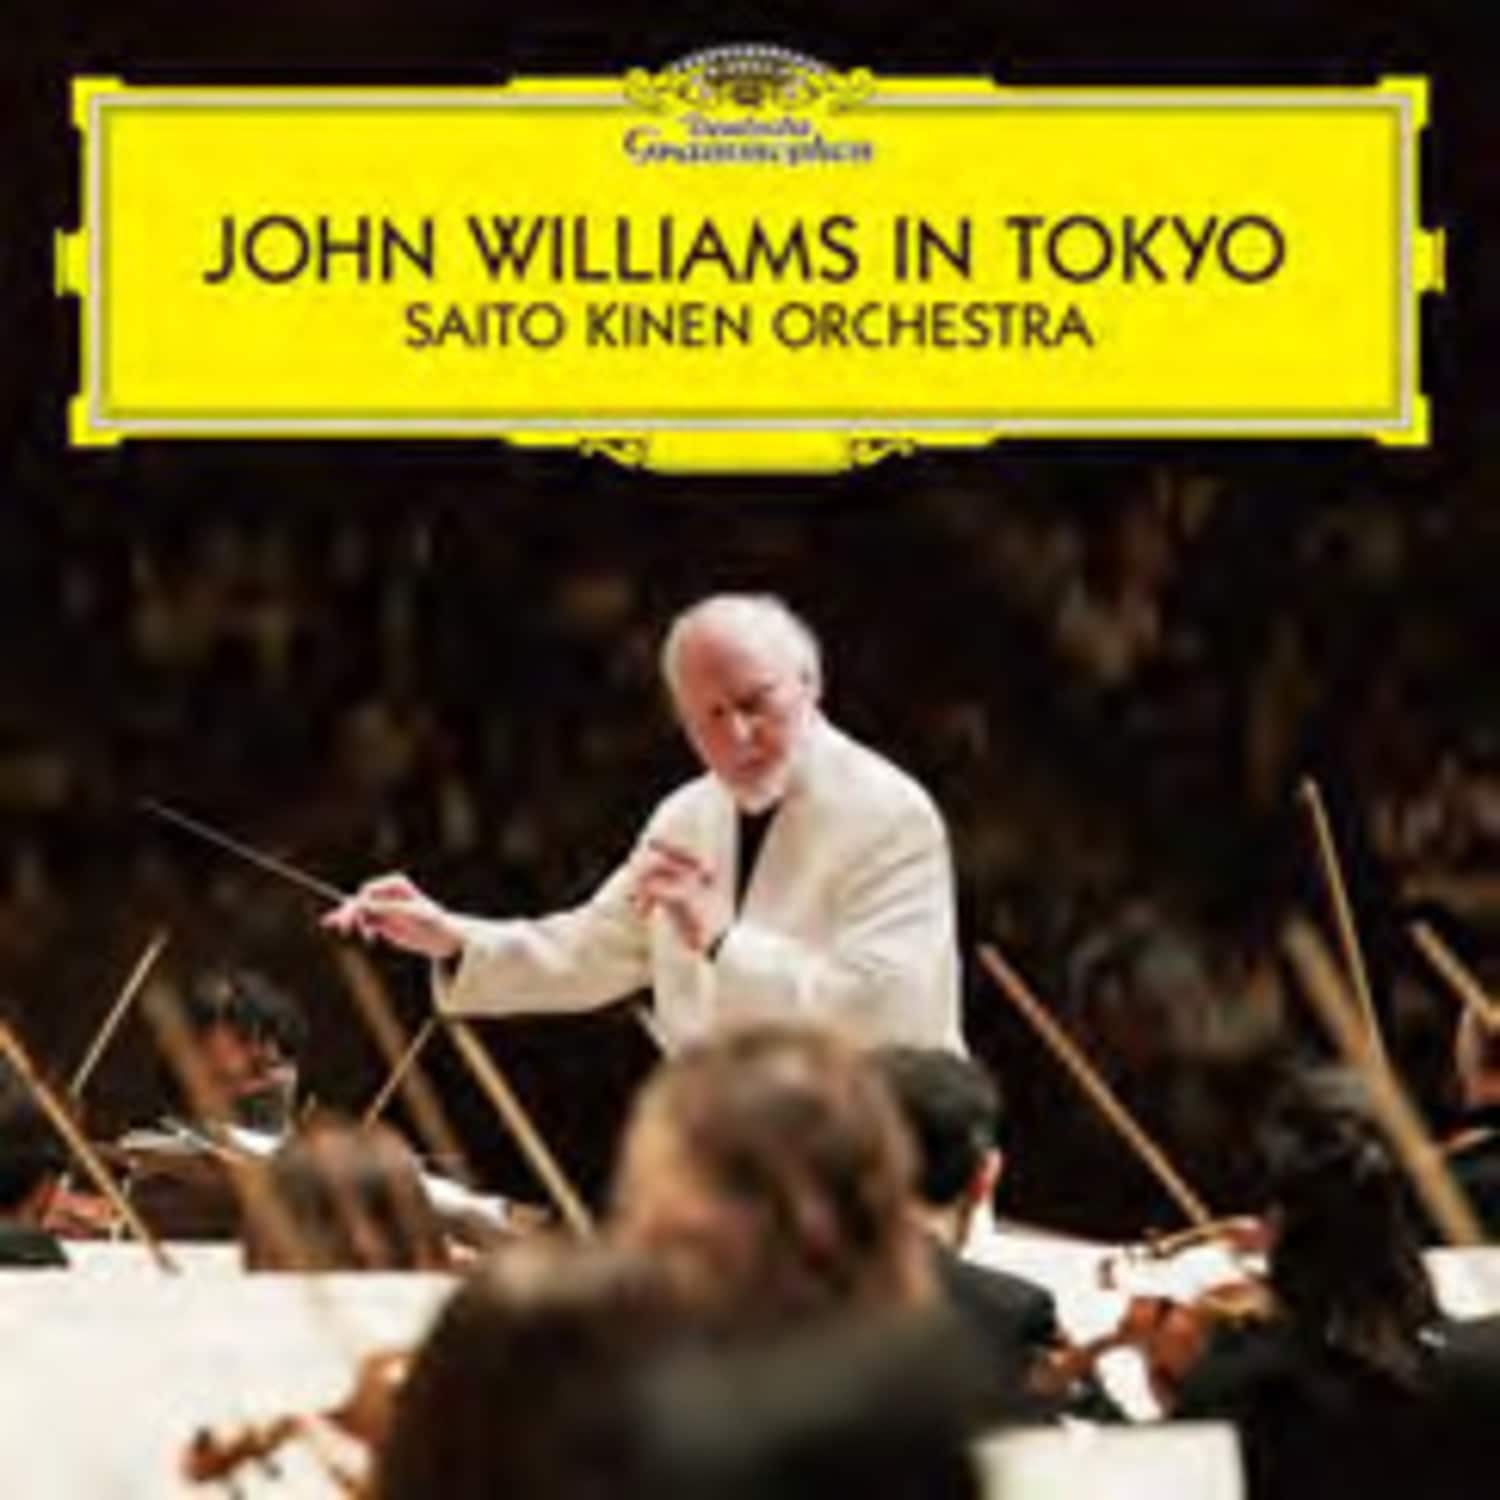 John Williams / Saito Kinen Orchstra - JOHN WILLIAMS IN TOKYO 